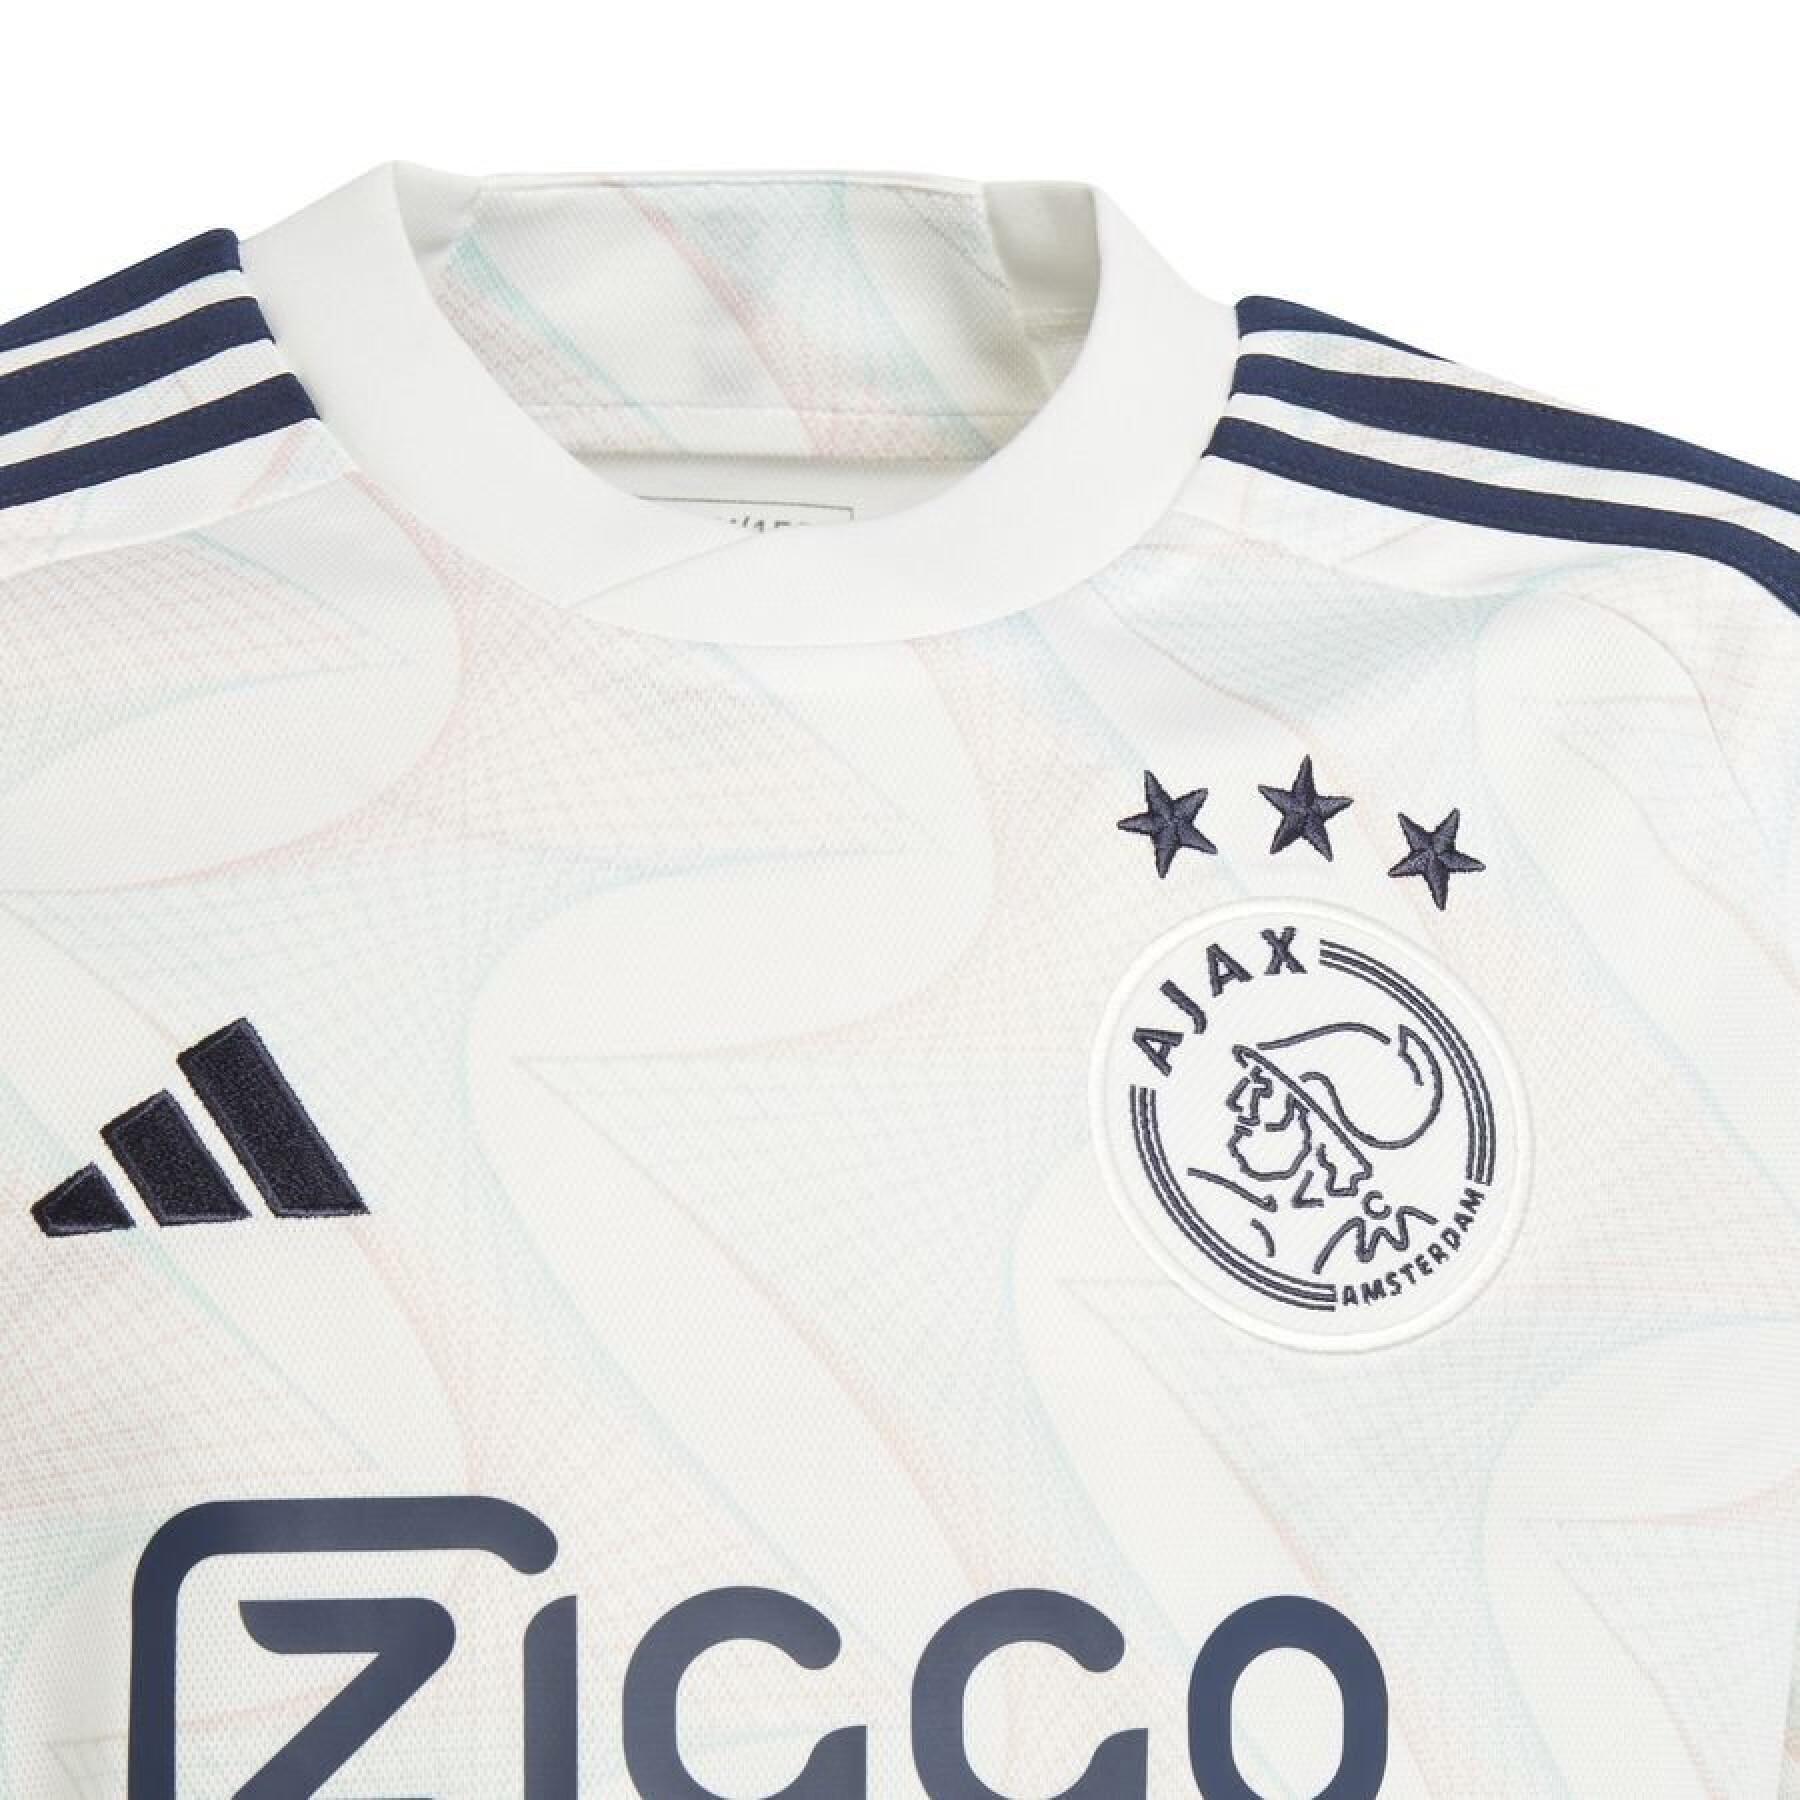 Outdoor jersey Ajax Amsterdam 2023/24